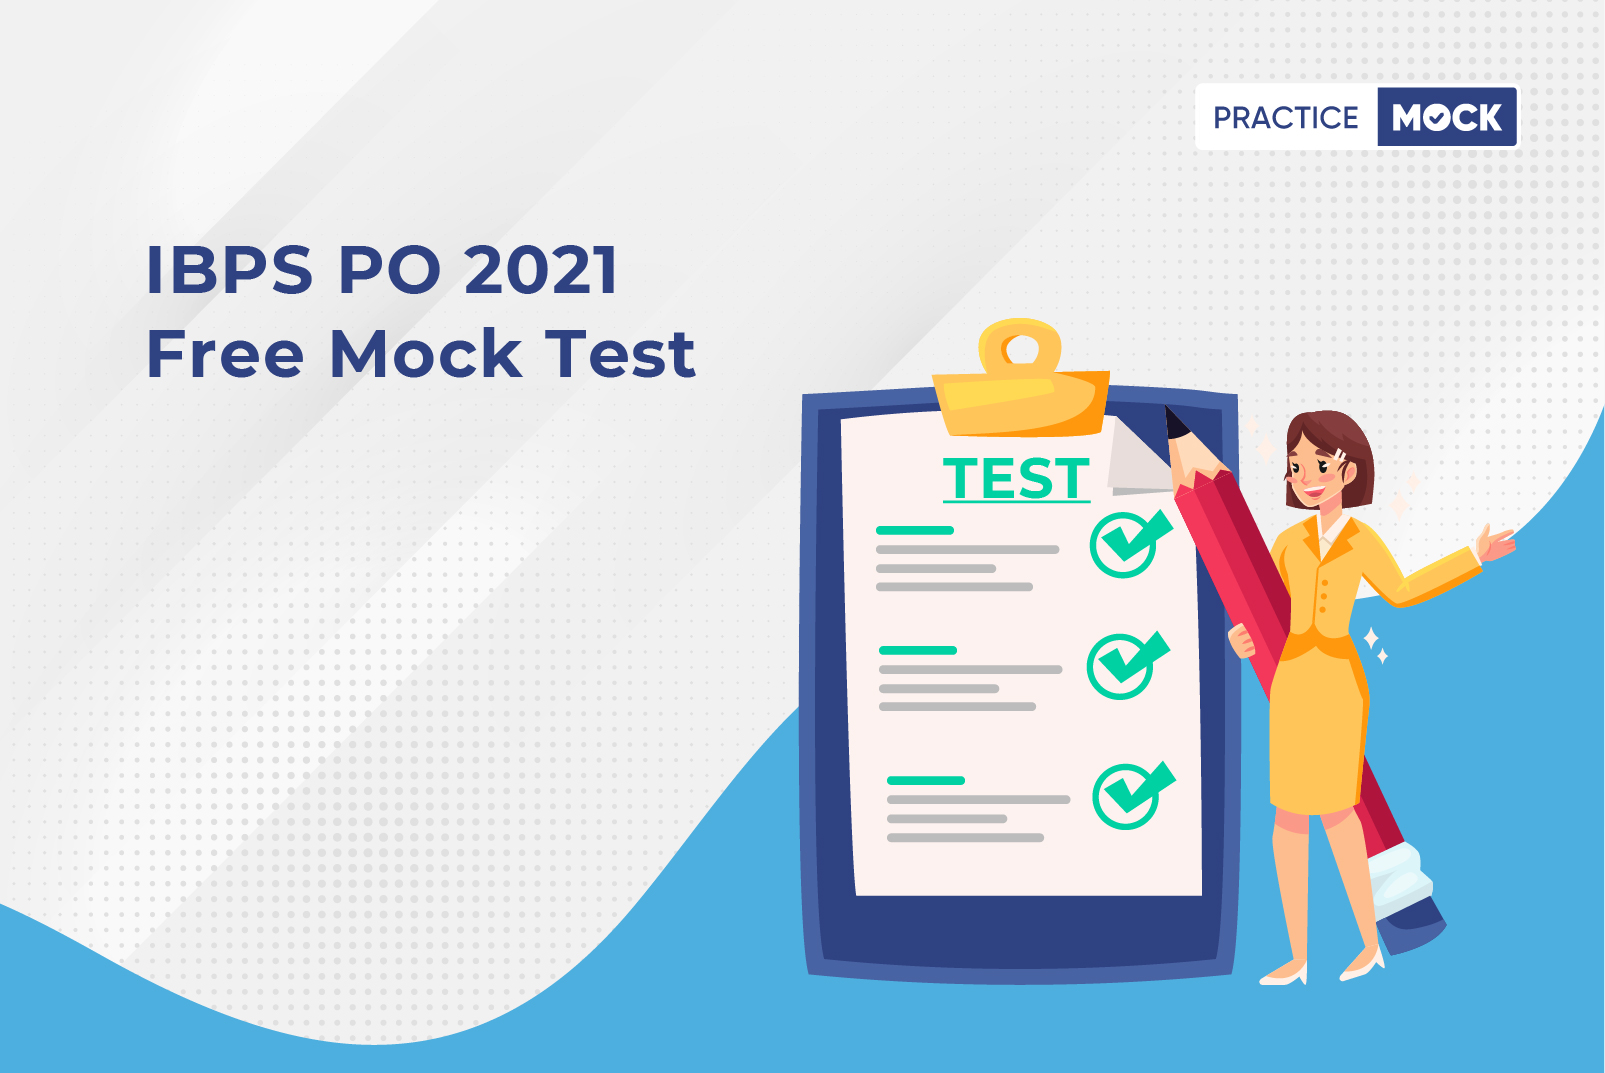 IBPS PO 2021 Free Mock Test